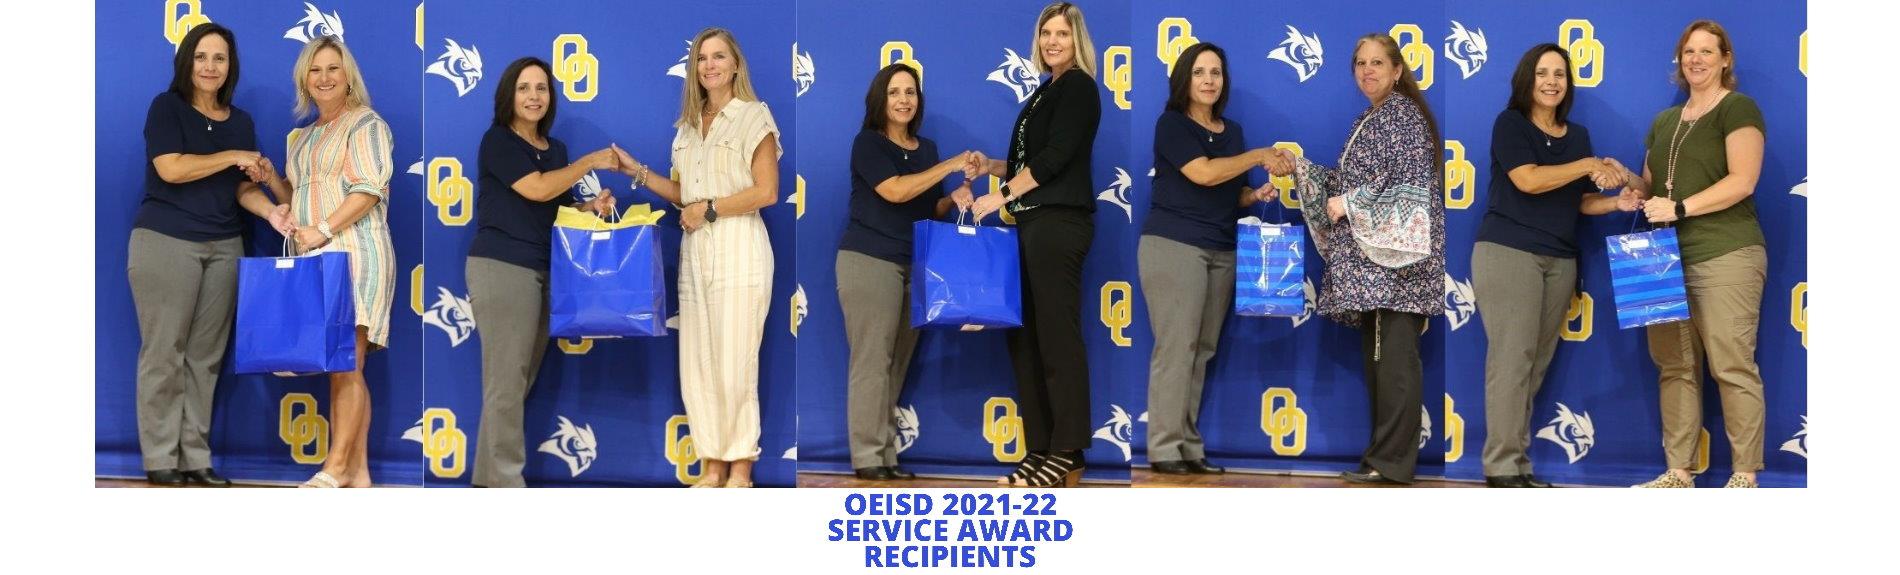 OEISD 2021-22 Service Award Recipients